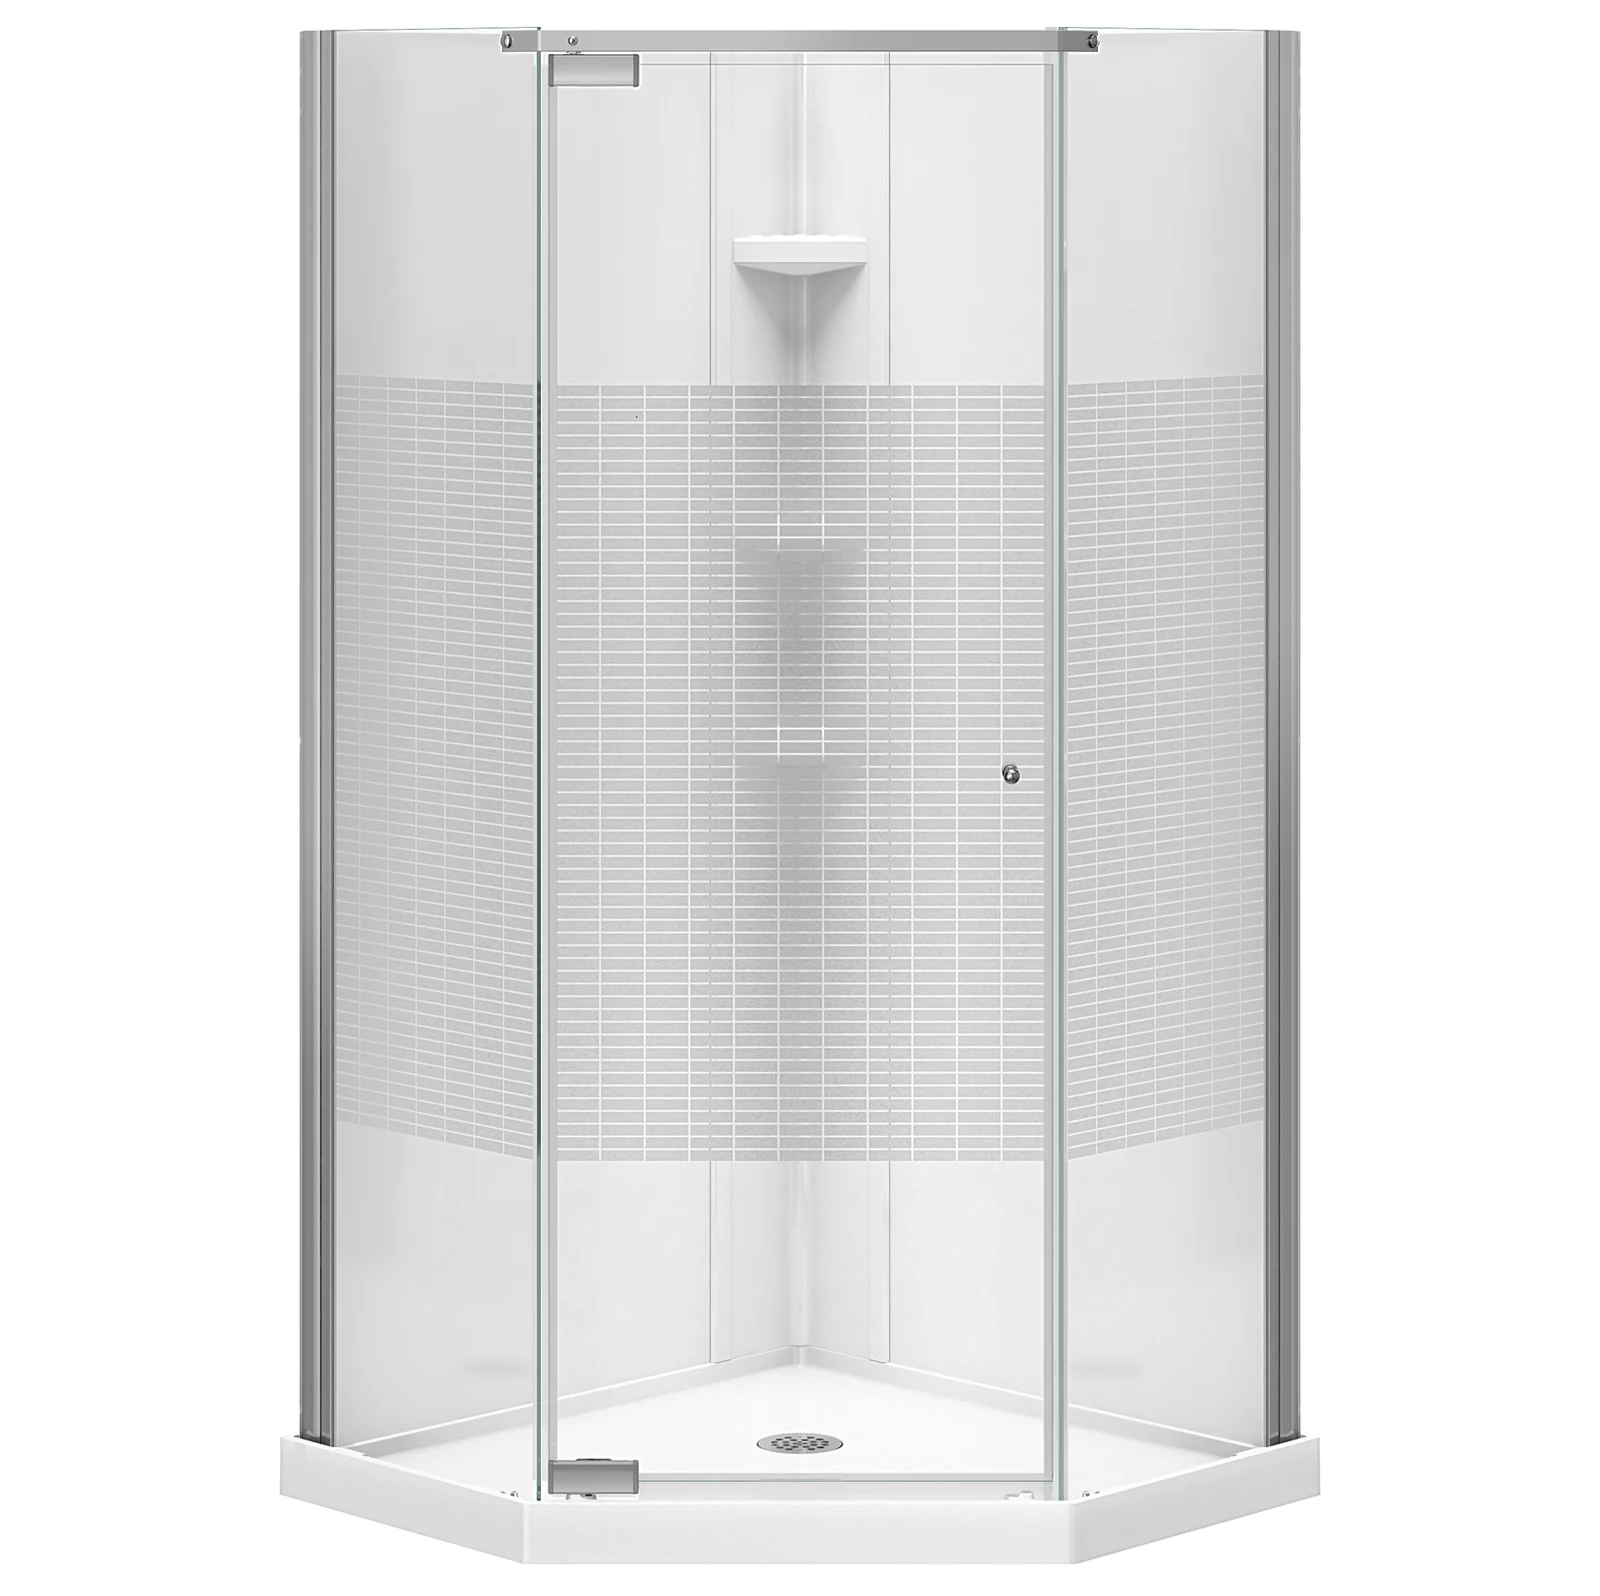 A polystyrene shower stall